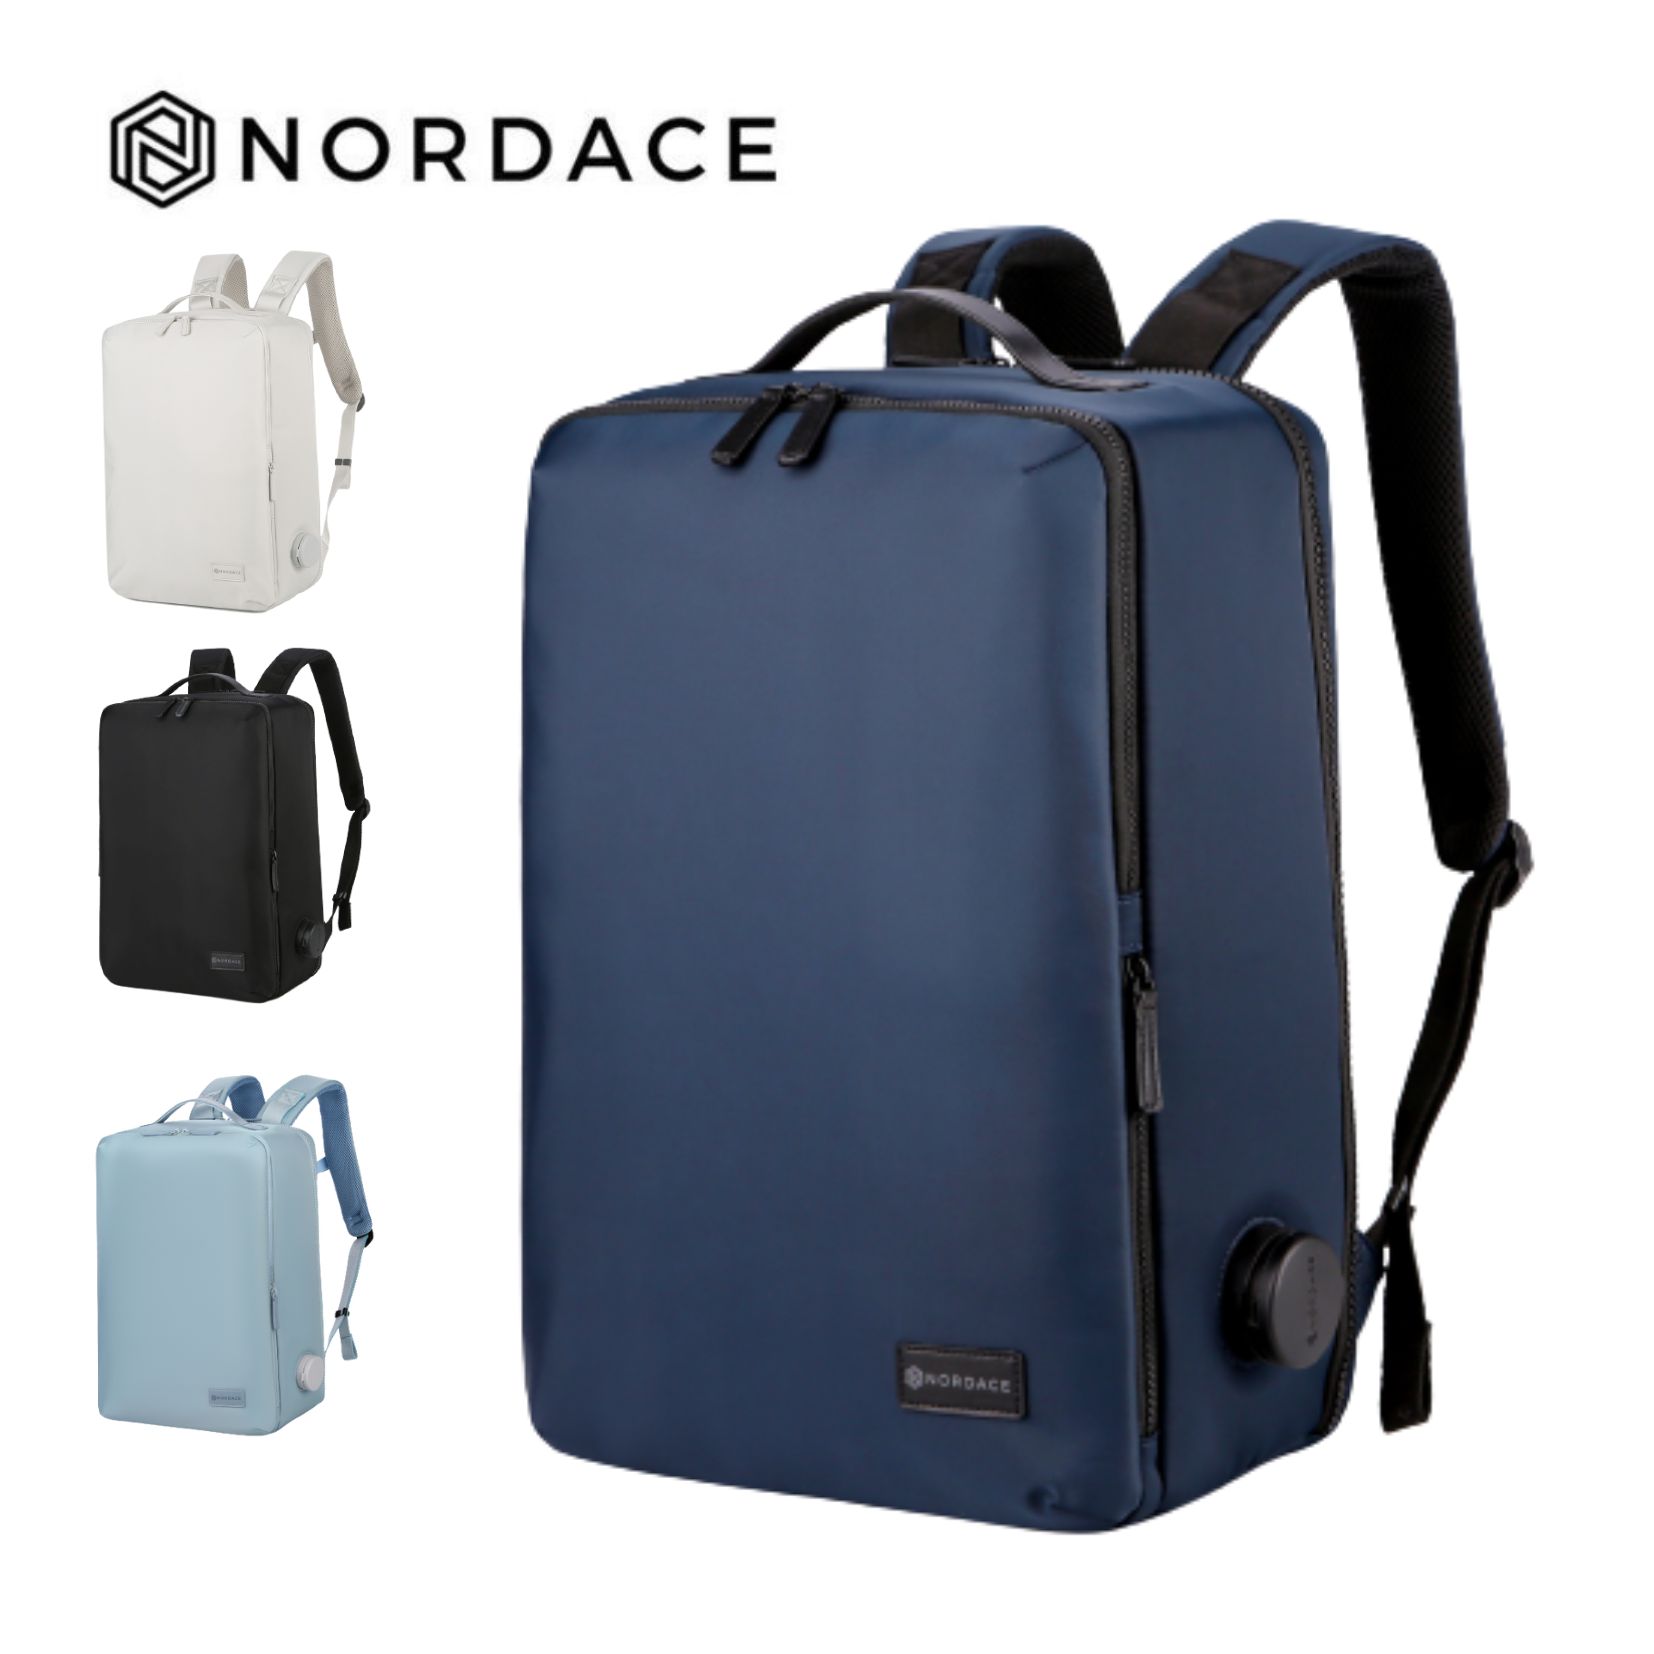 Nordace Laval-後背包 斜背包 手提包 胸包 側背包 旅行包 工作包 四色任選 藍色